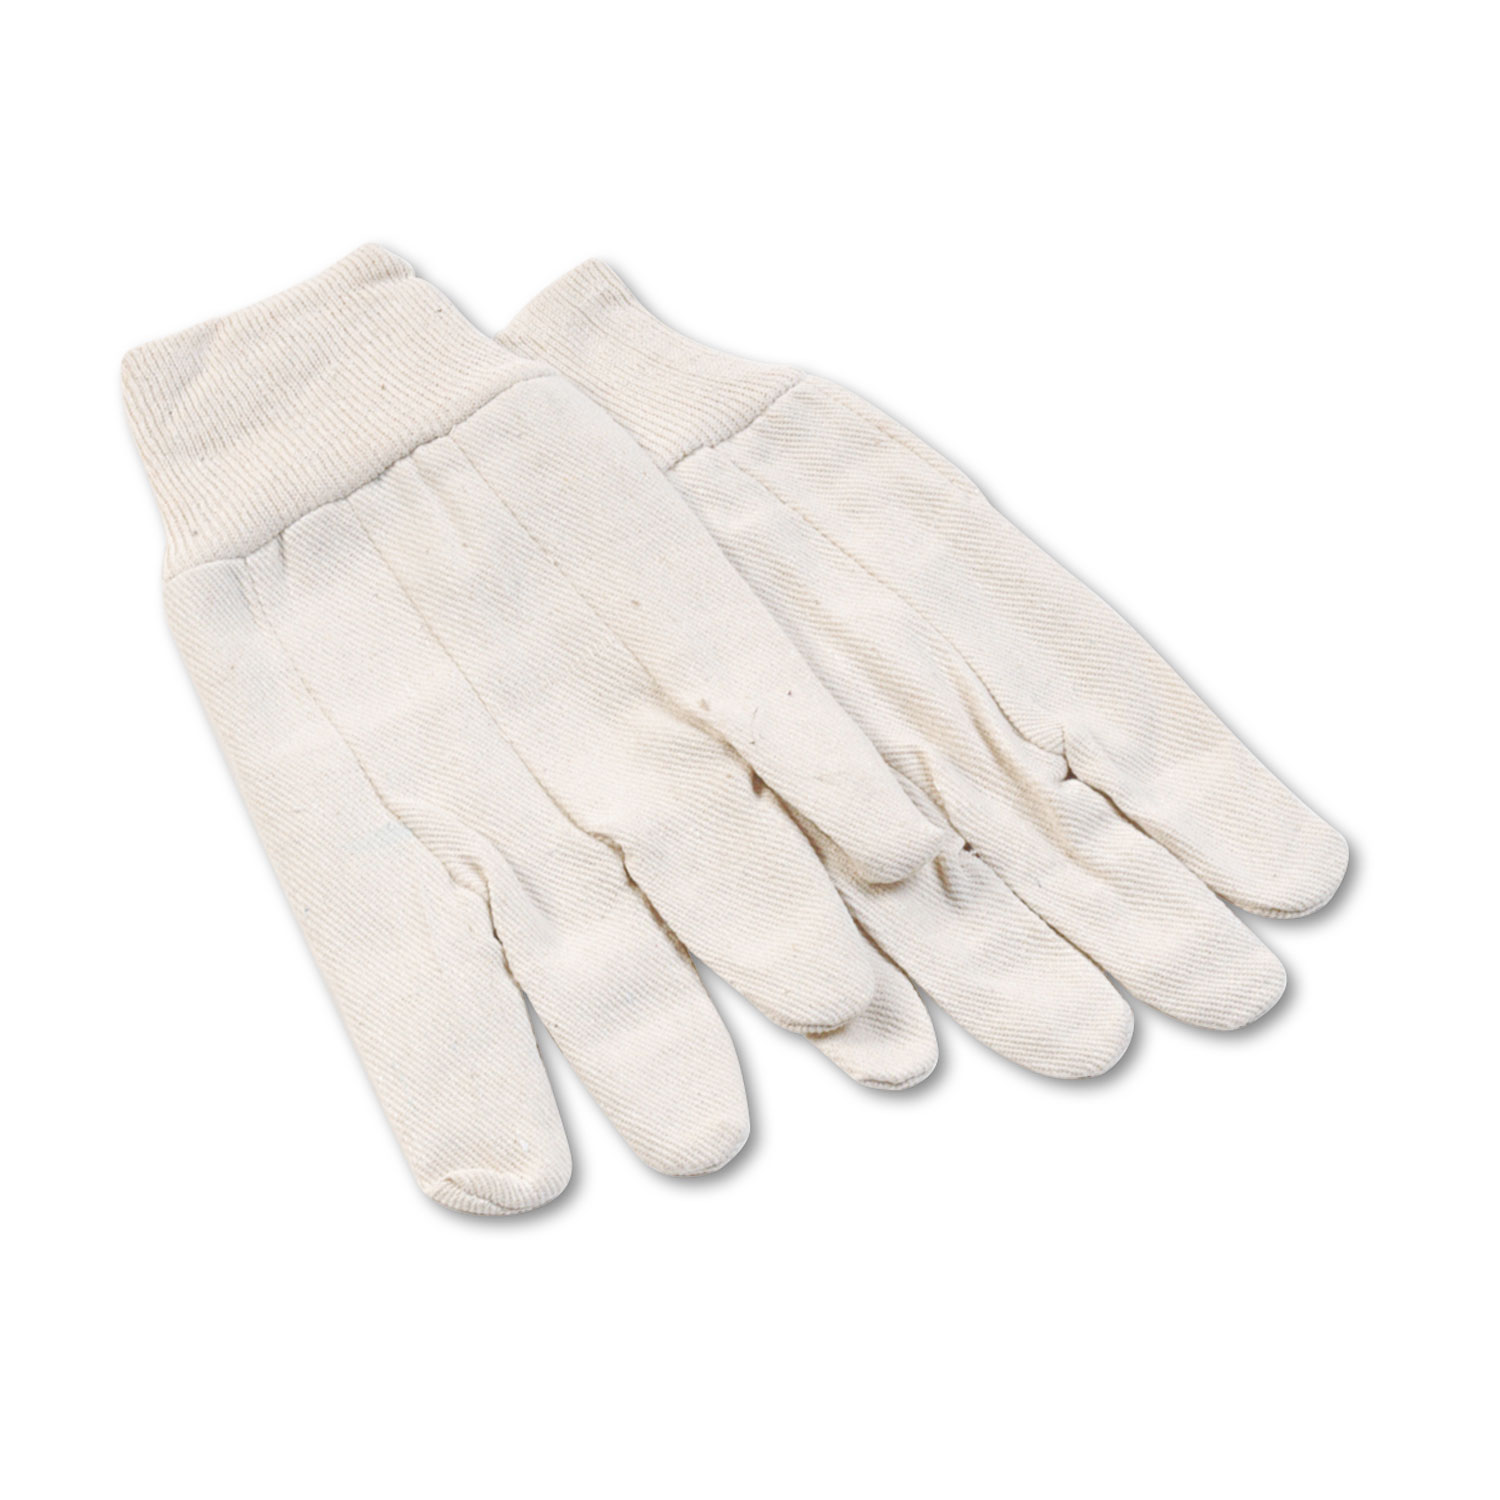  Boardwalk BWK7 8 oz Cotton Canvas Gloves, Large, 12 Pairs (BWK7) 